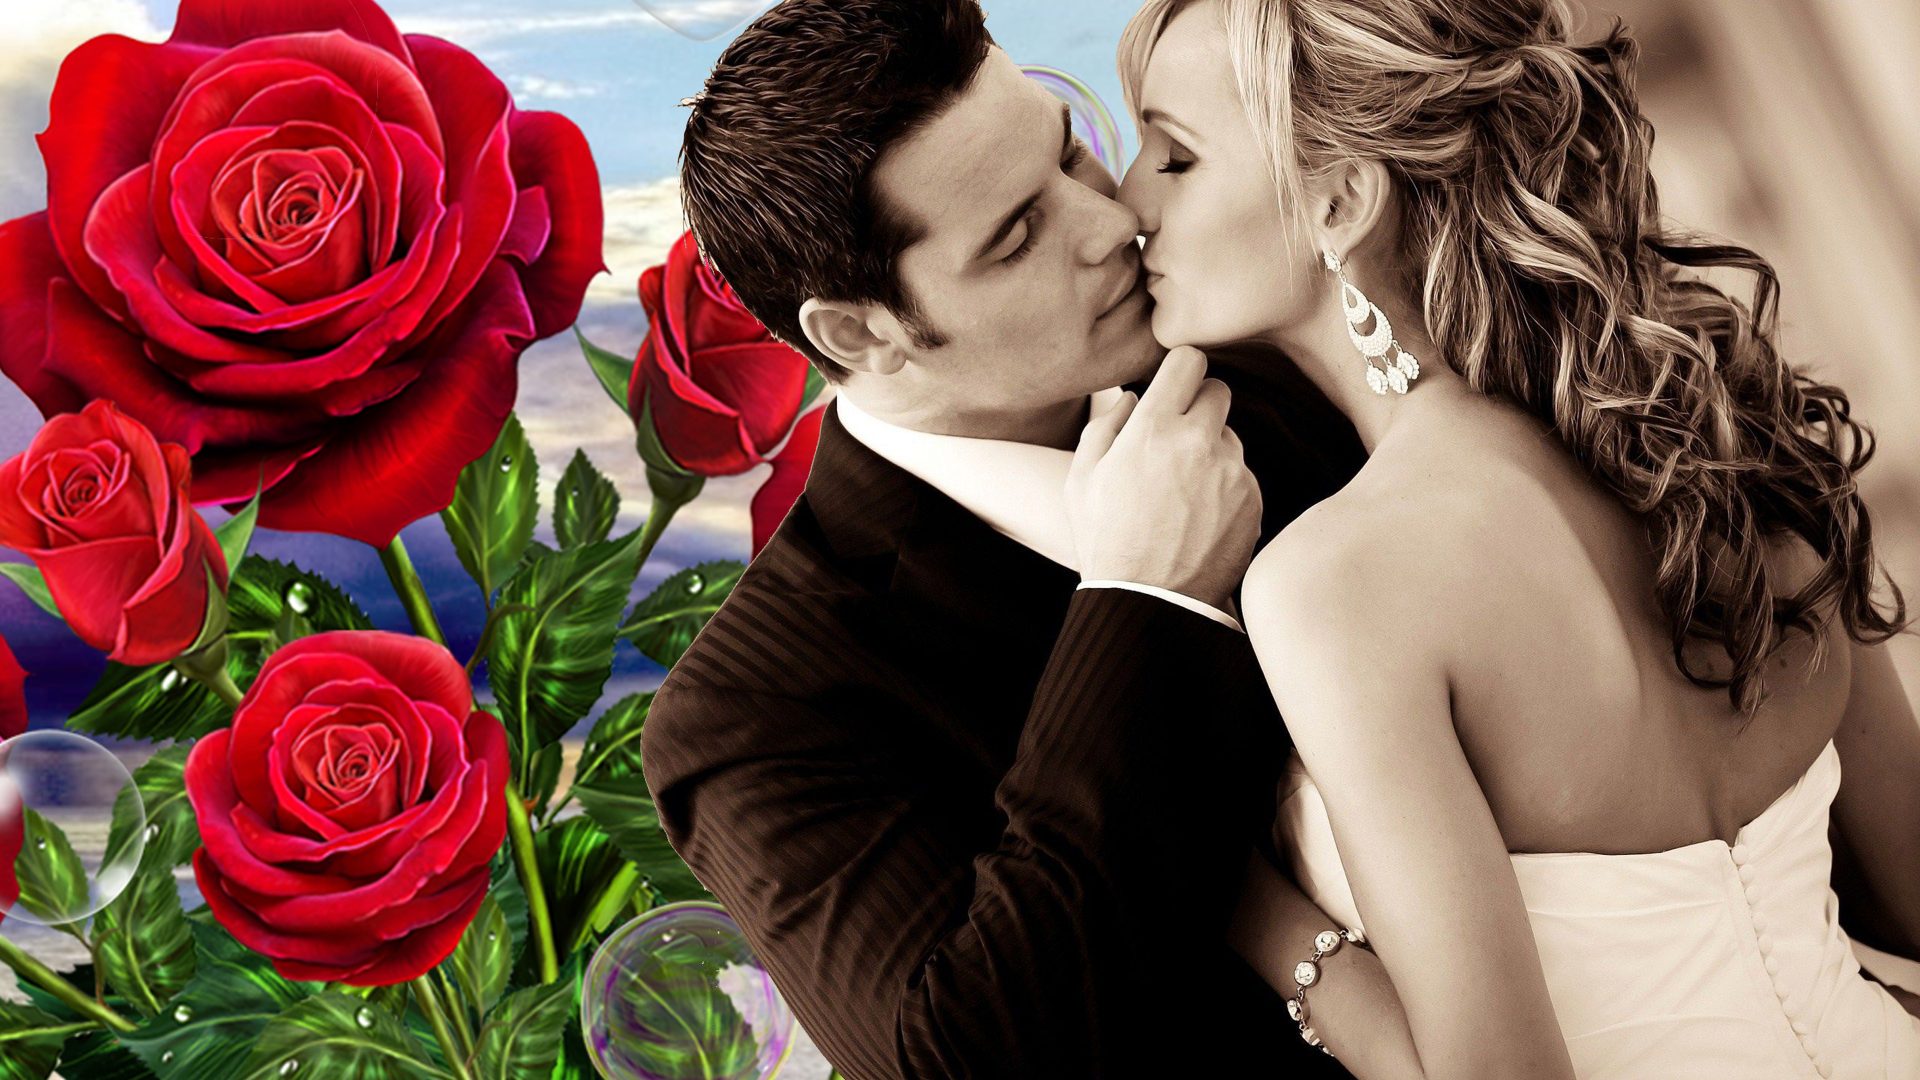 Love way show. Любовь романтика. С любовью картинки женщине. Мужчина дарит розы женщине. Мужчина дарит цветы женщине.